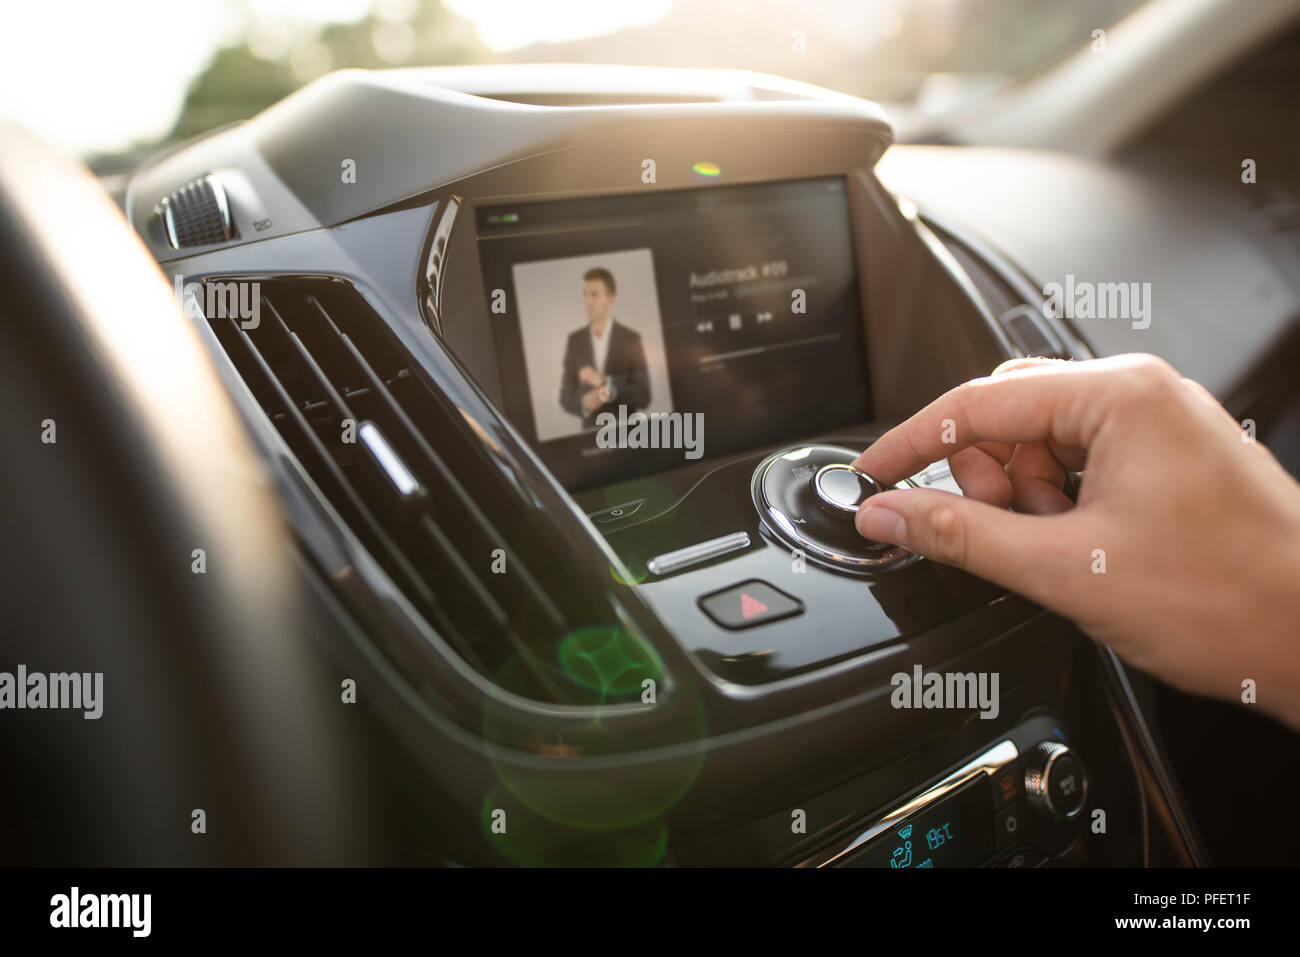 Car radio -Fotos und -Bildmaterial in hoher Auflösung – Alamy